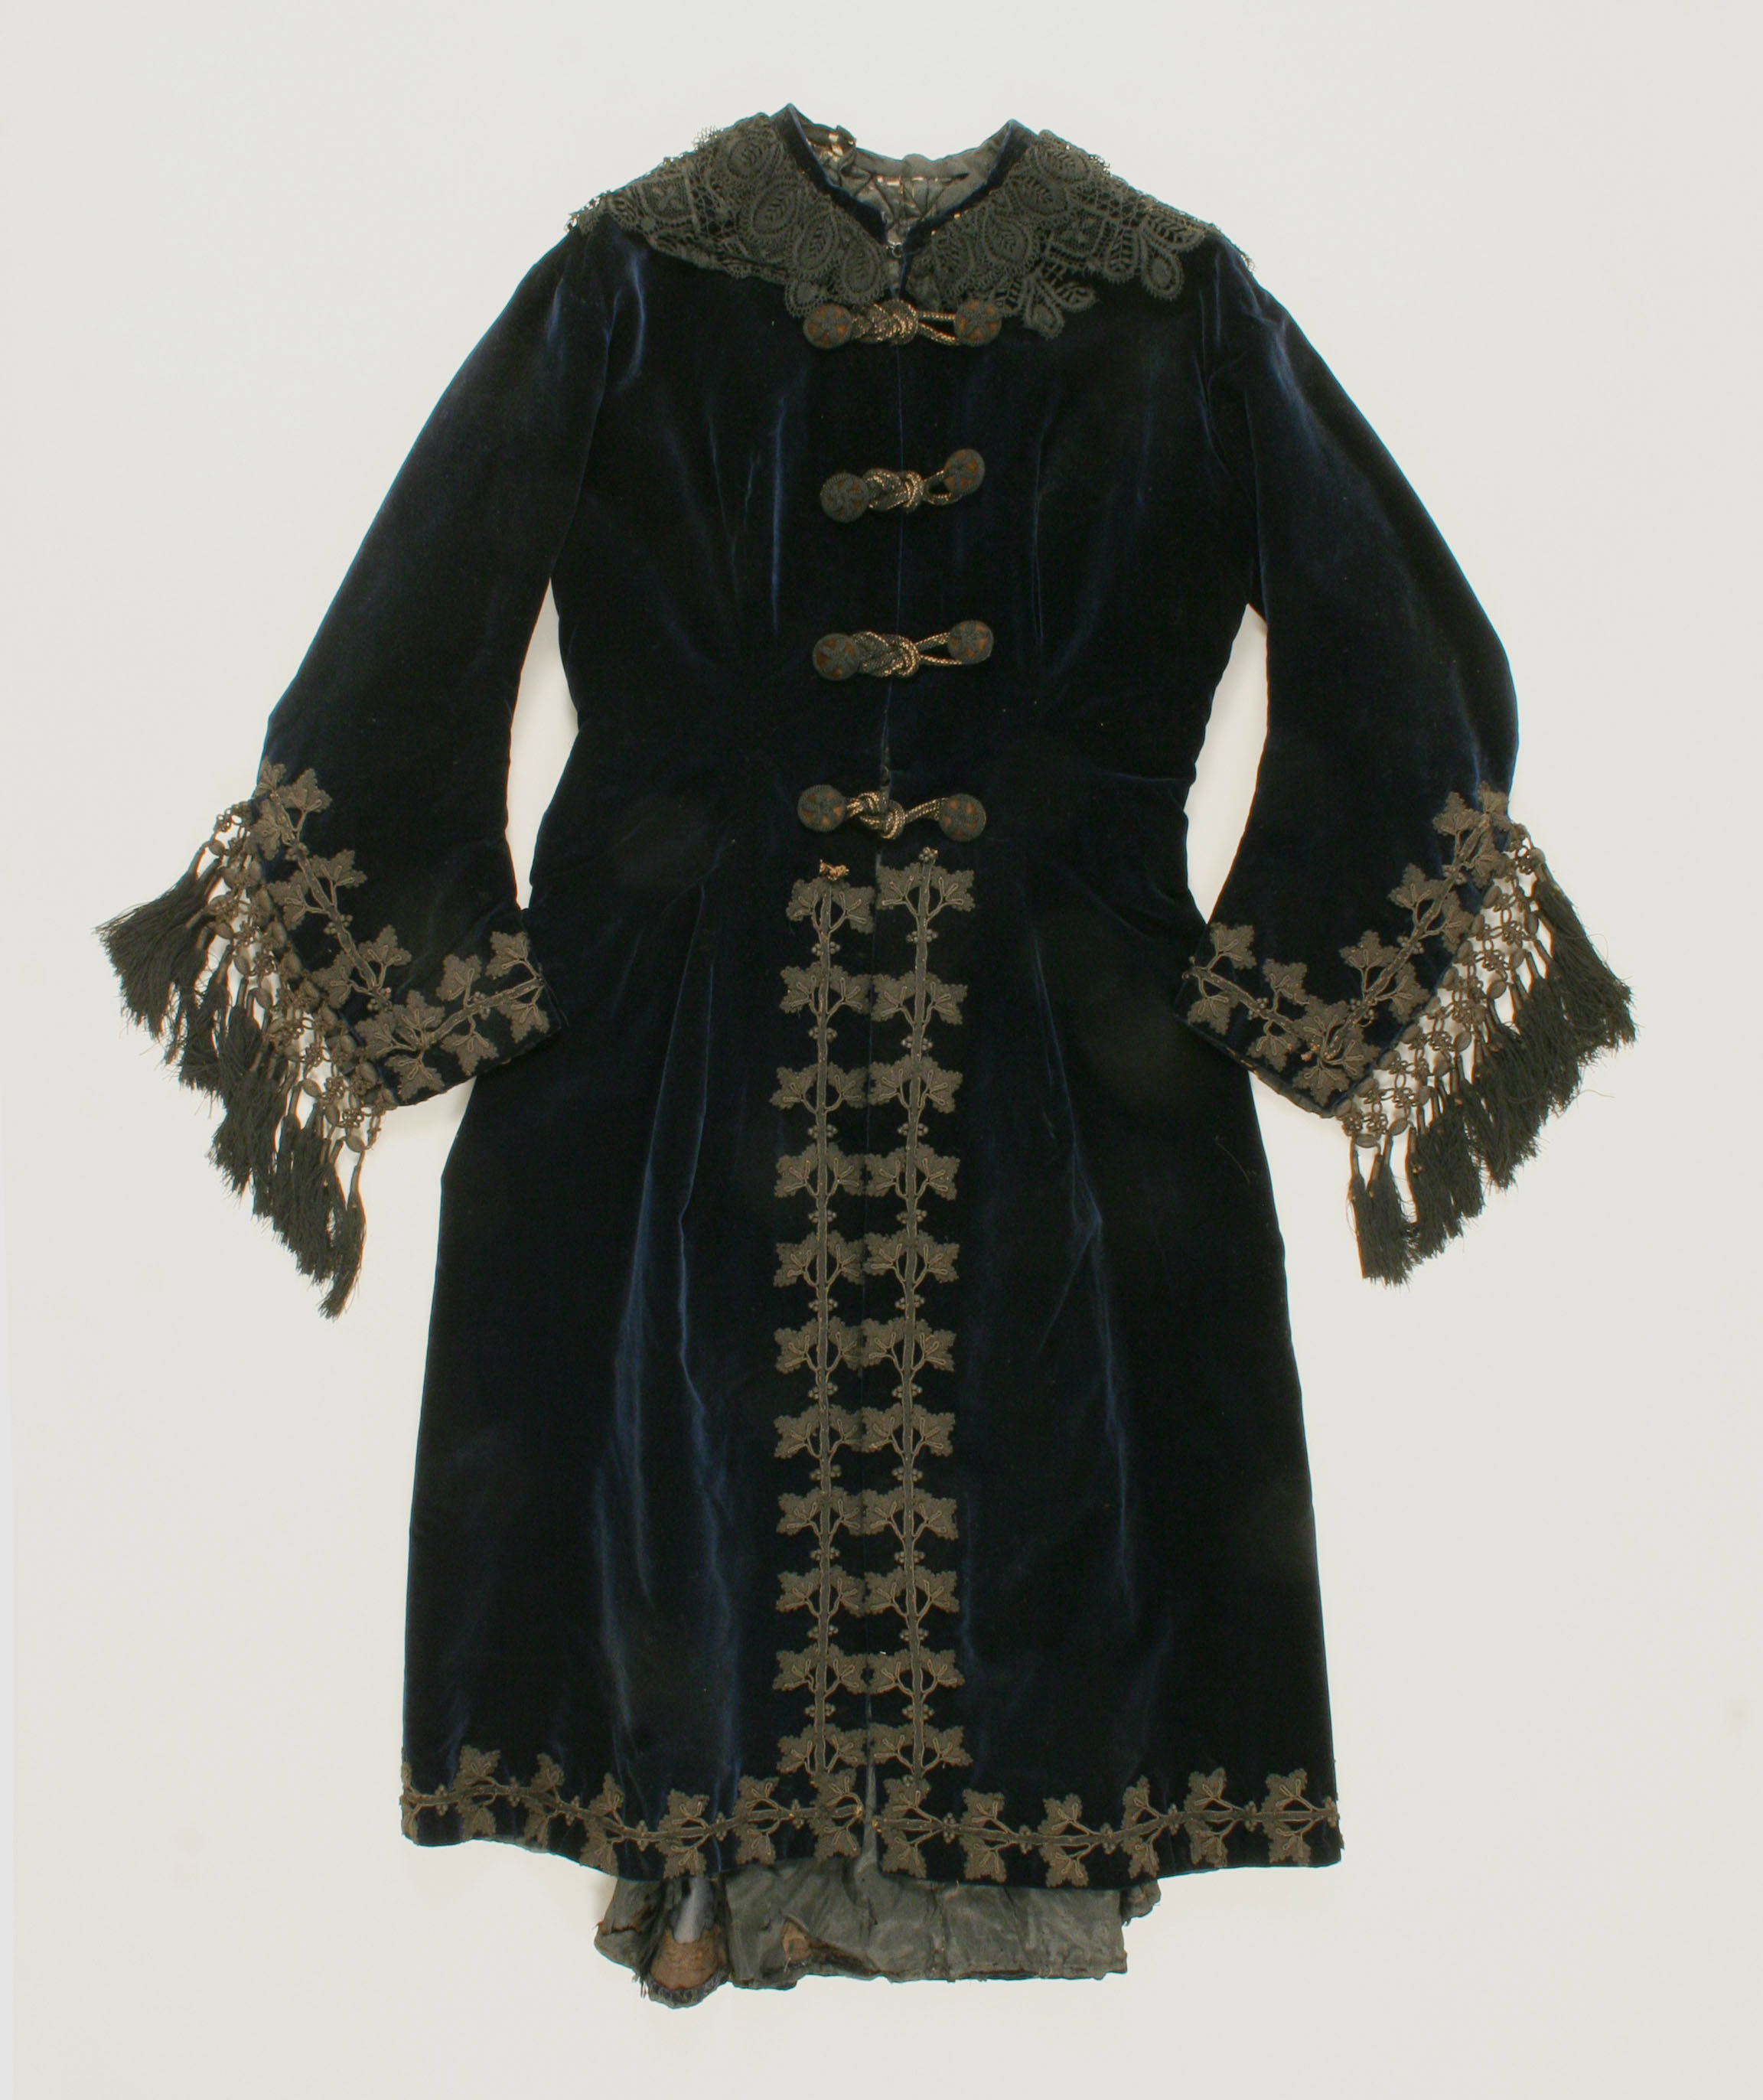 Robe à la Polonaise | American | The Metropolitan Museum of Art